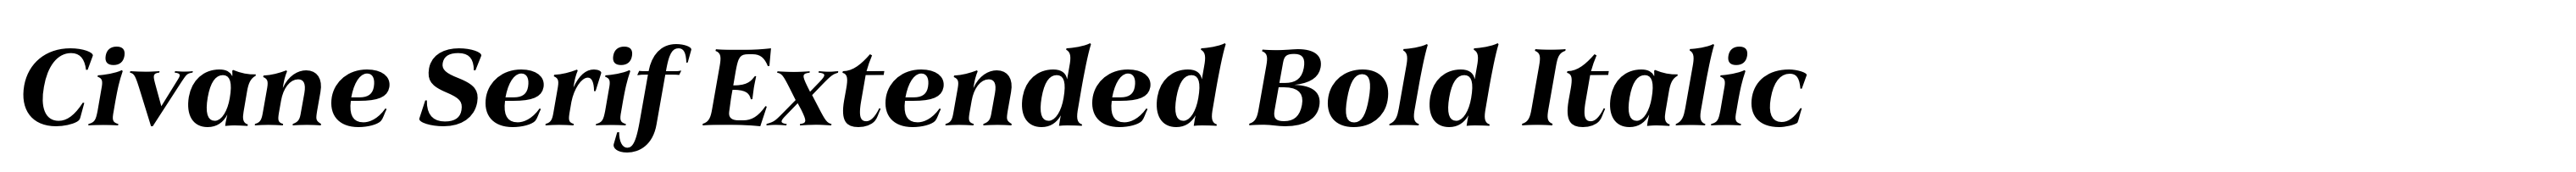 Civane Serif Extended Bold Italic